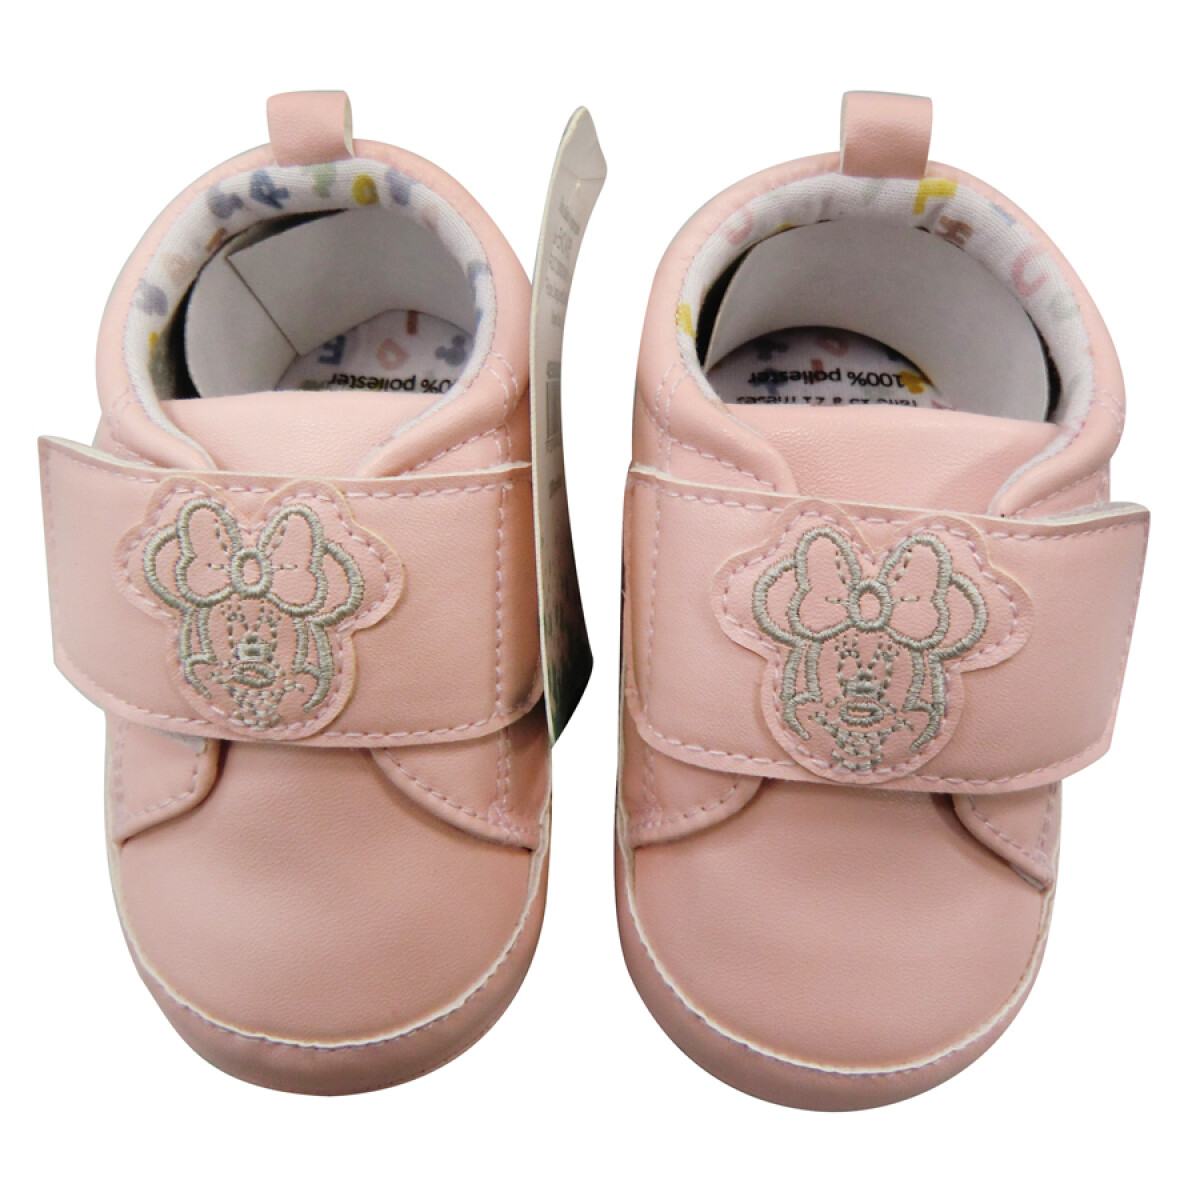 Calzado Infantil Disney con Velcro - MINNIE 